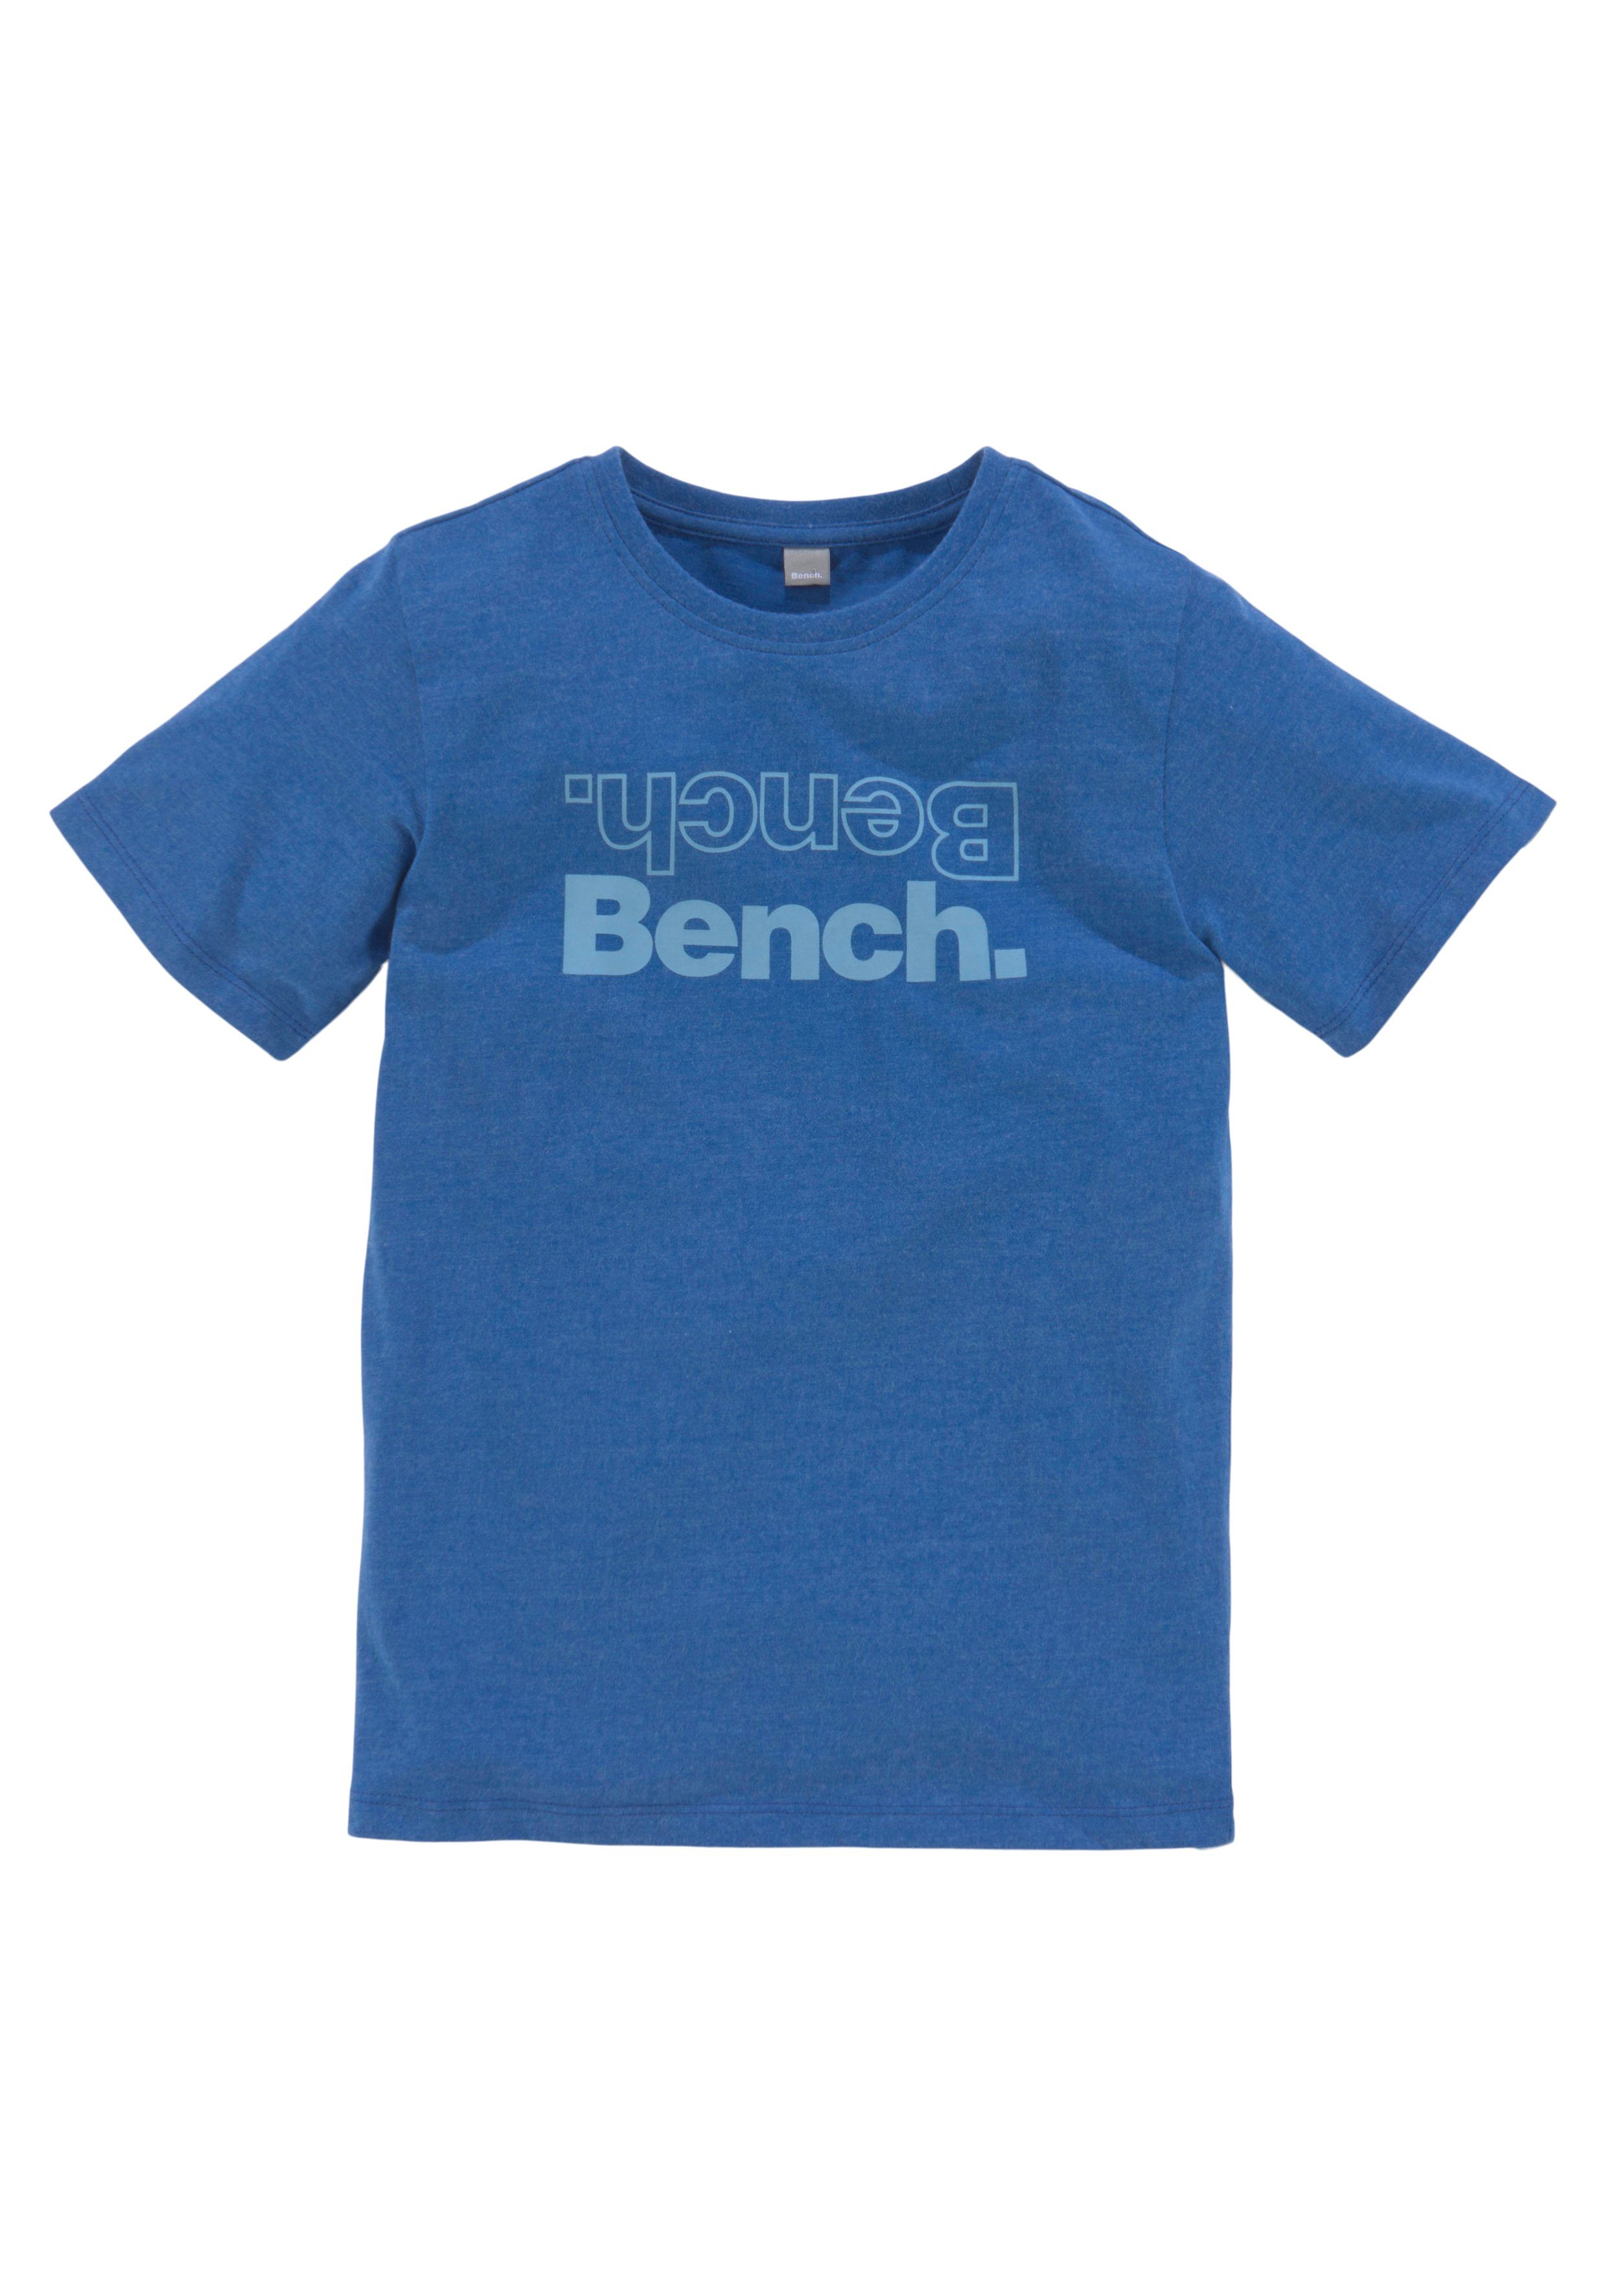 Bench. T-Shirt mit coolem Brustdruck